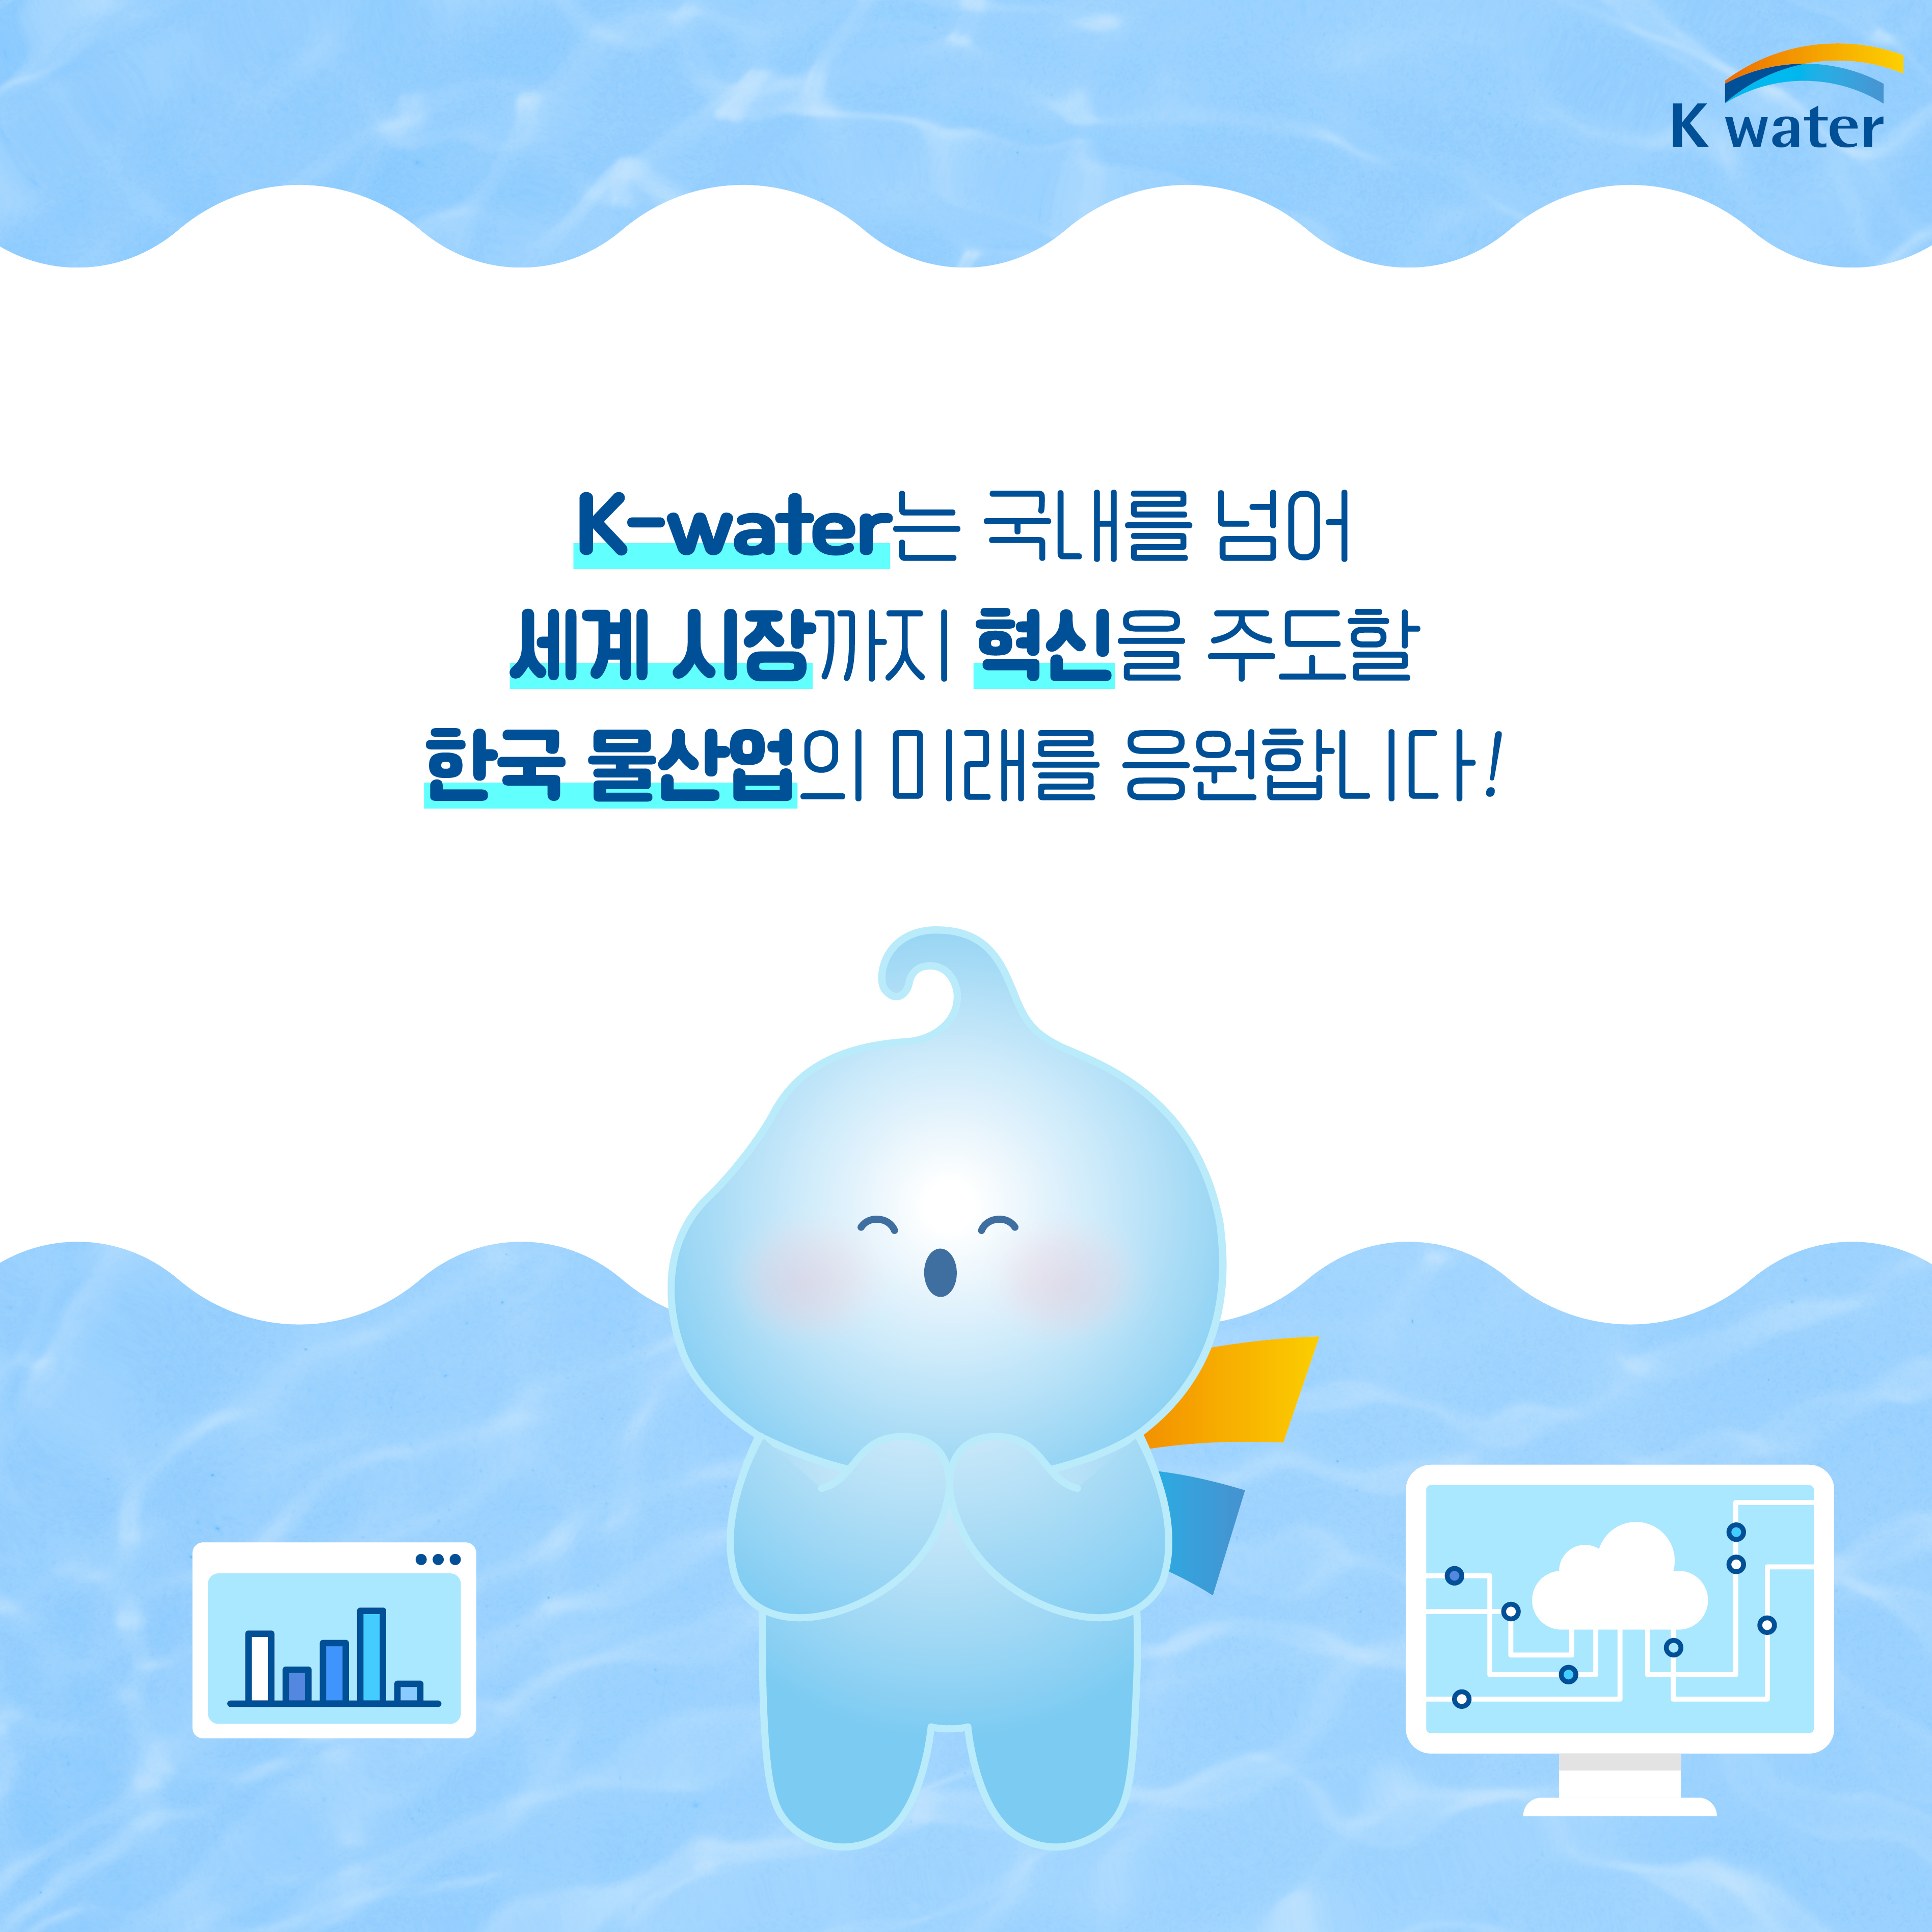 K-water는 국내를 넘어 세계 시장까지 혁신을 주도할 한국 물산업의 미래를 응원합니다!